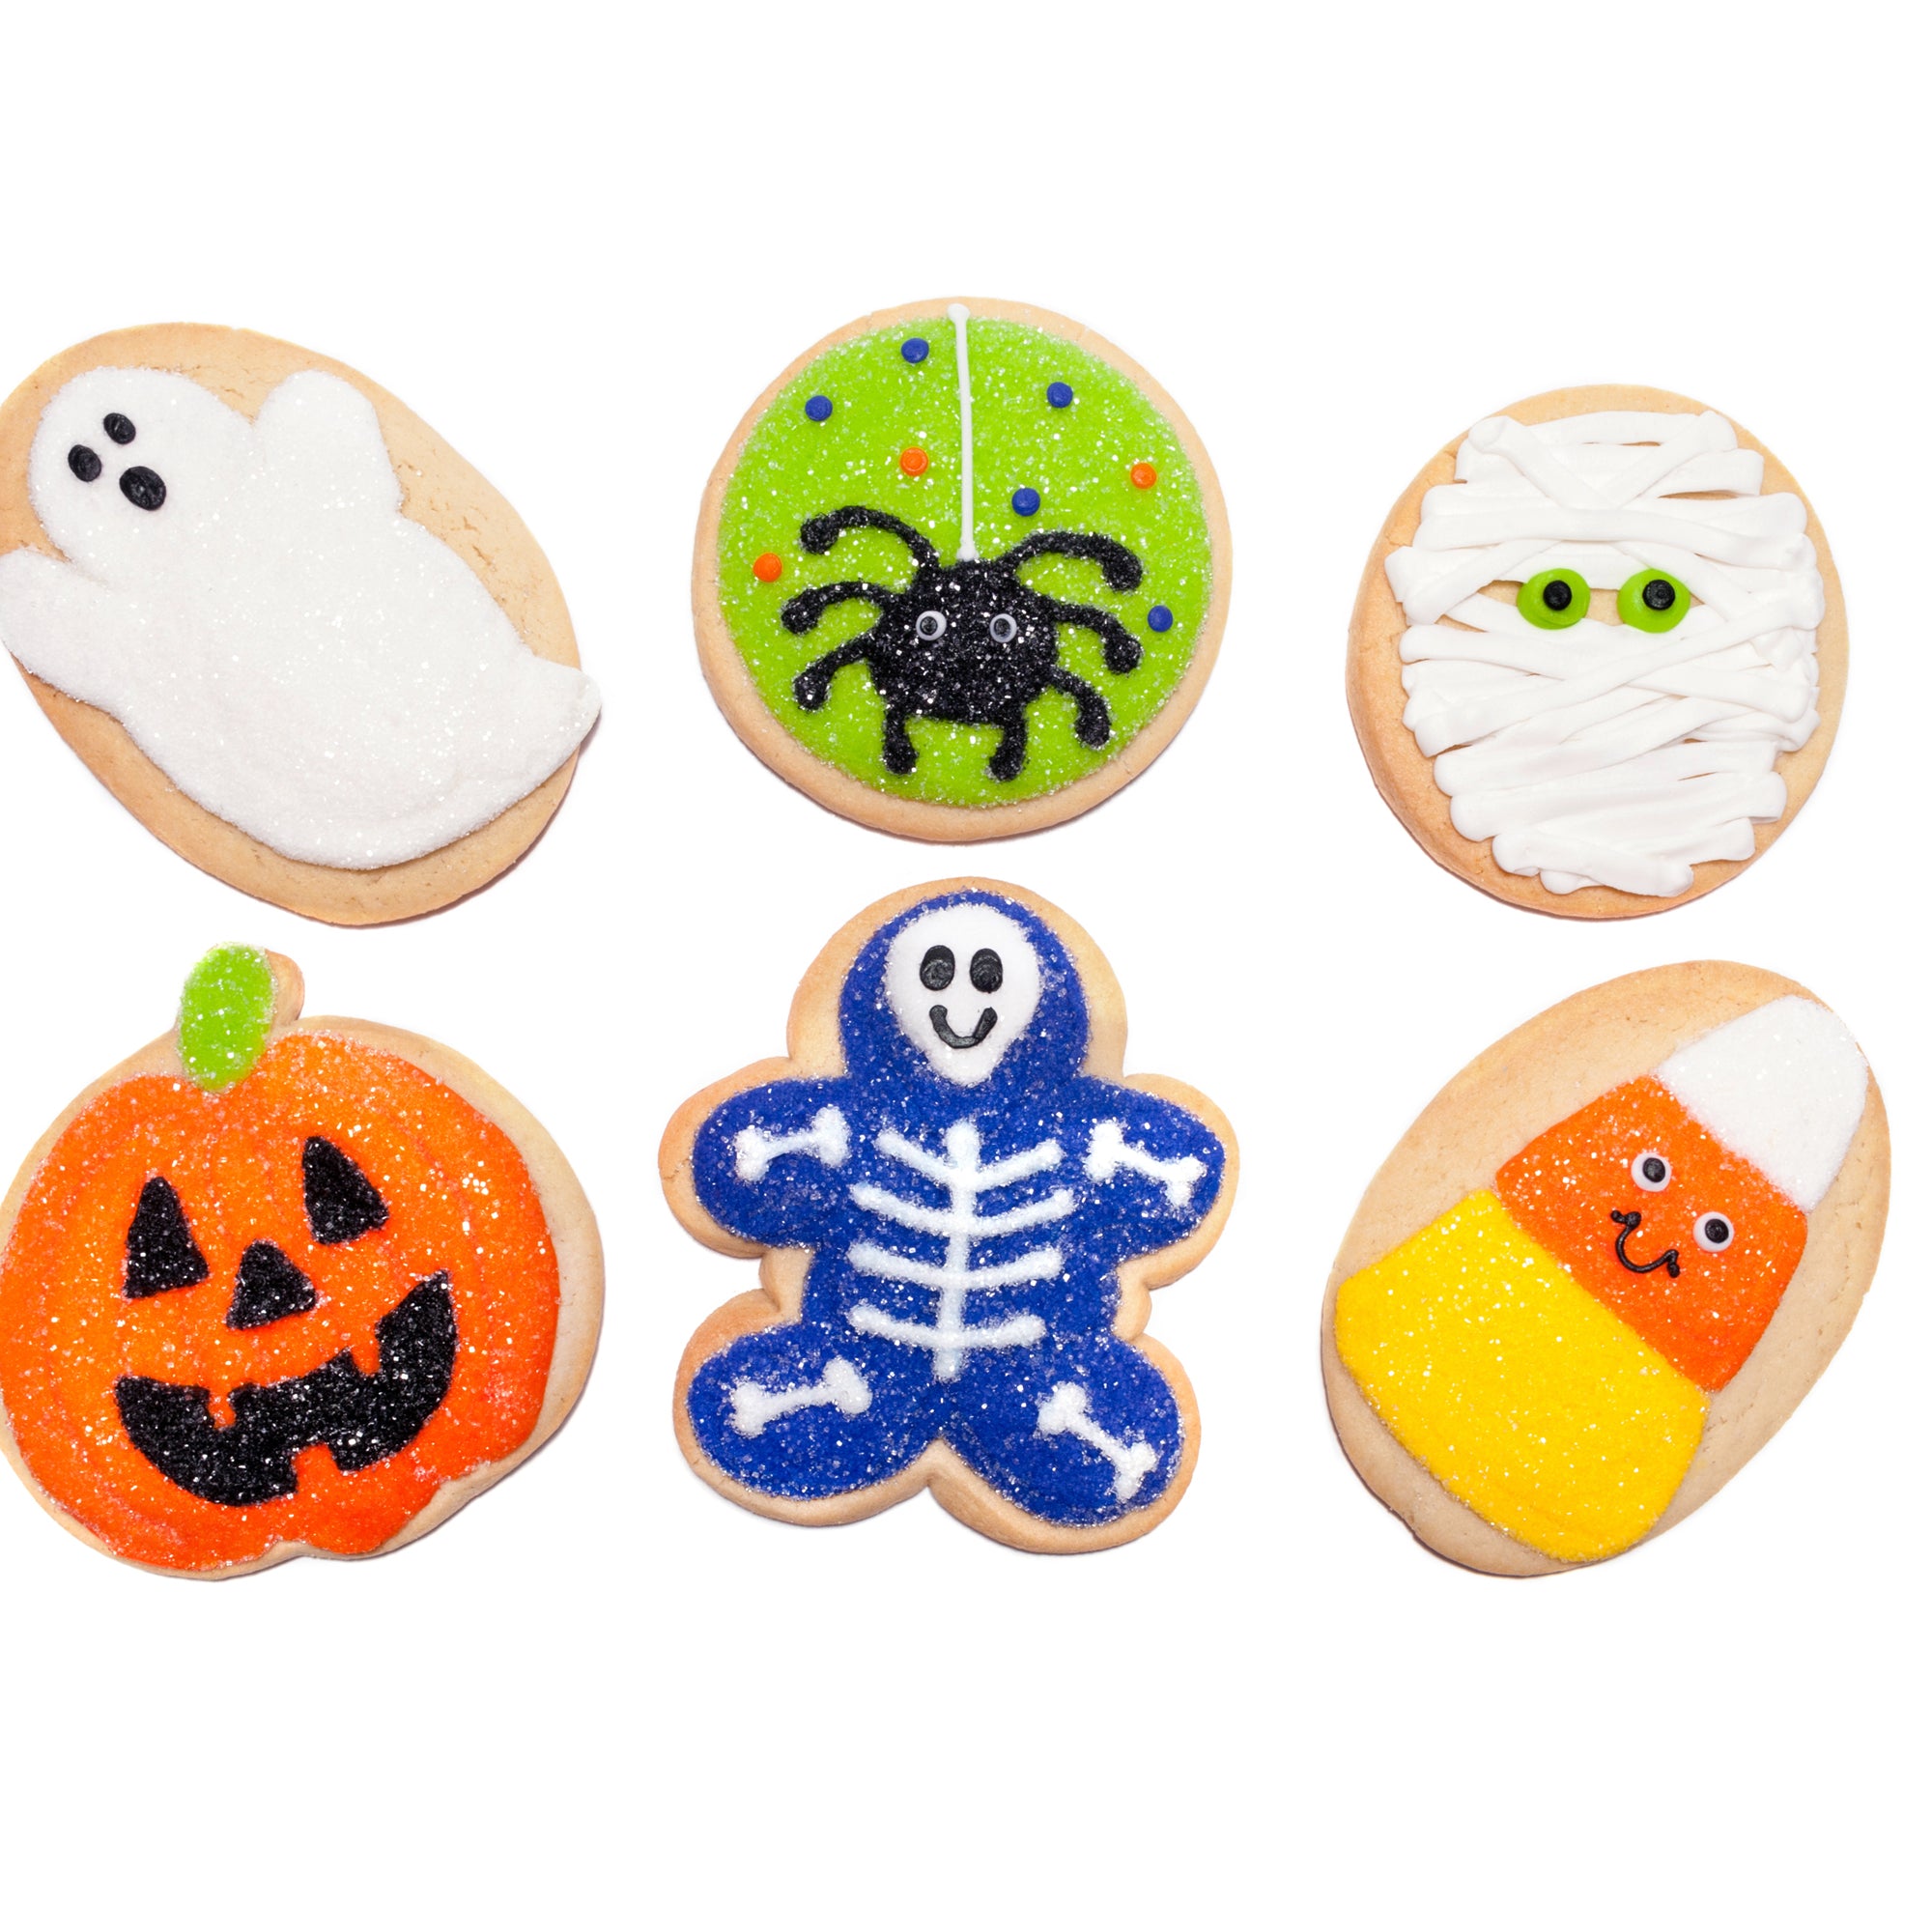 A Dozen Decorated Halloween Cookies